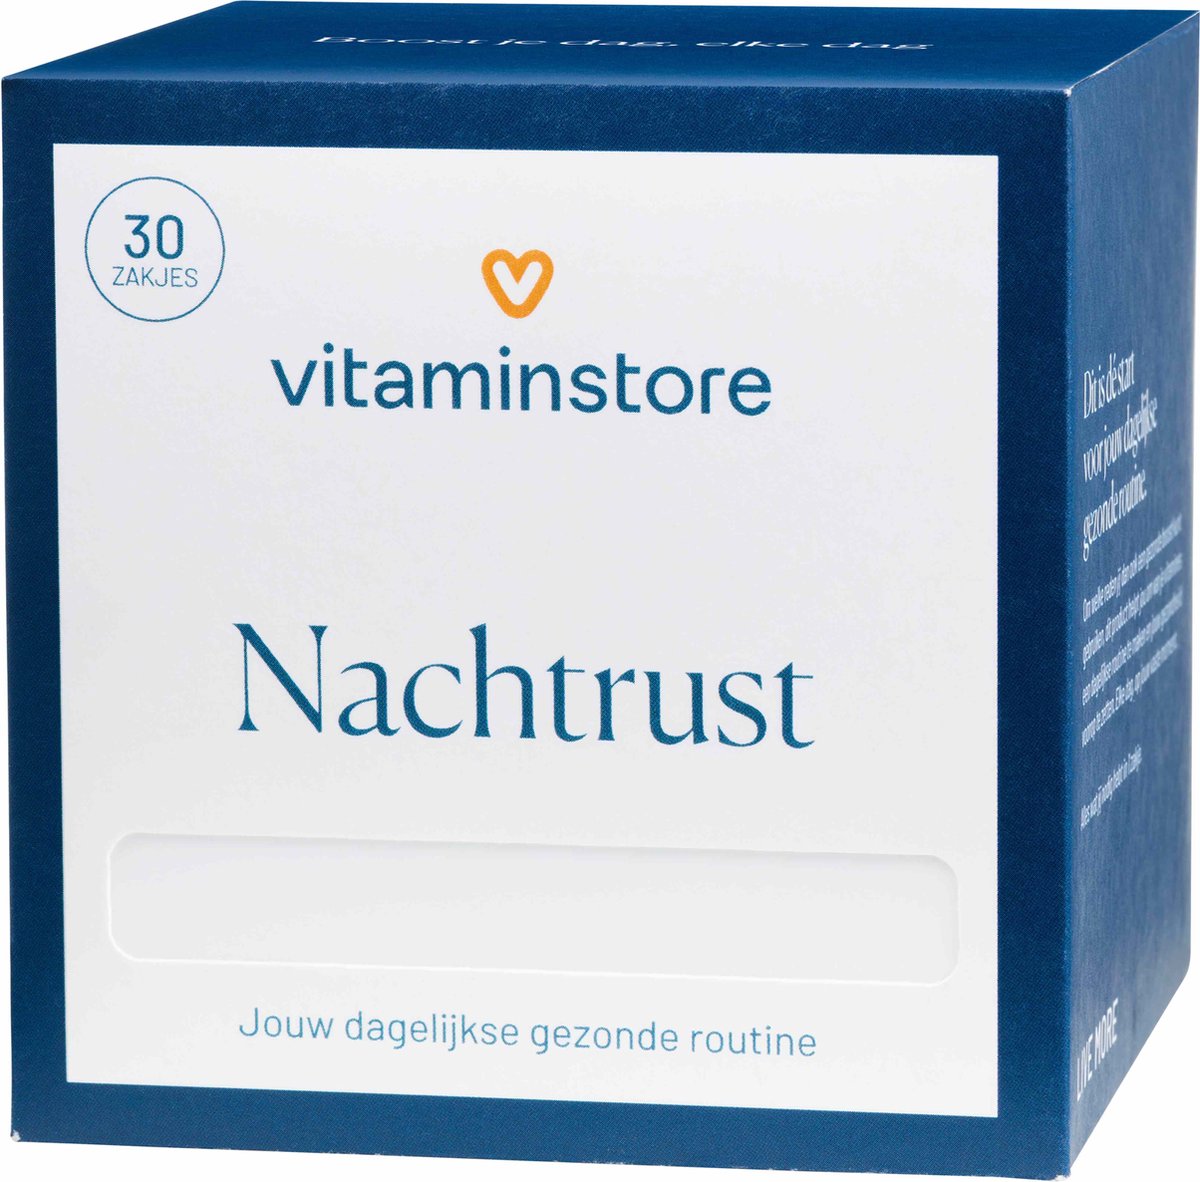 Vitaminstore - Dagdosering Nachtrust - 30 zakjes